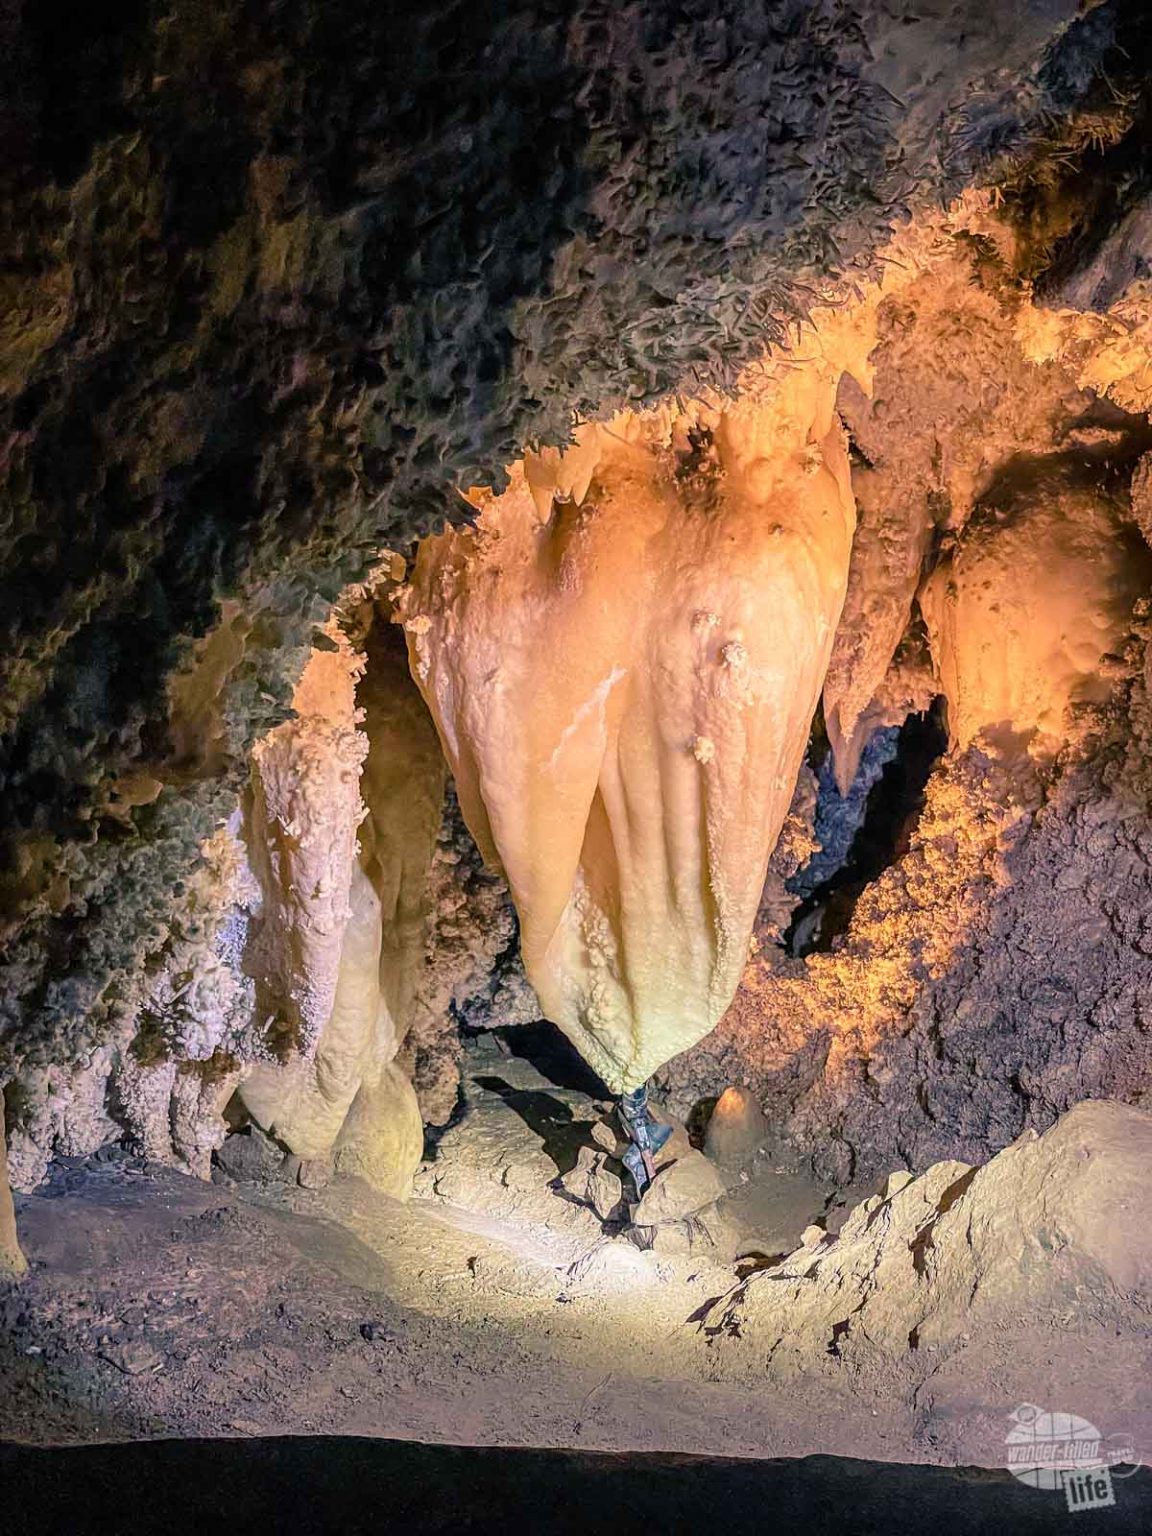 timpanogos cave tour reservations